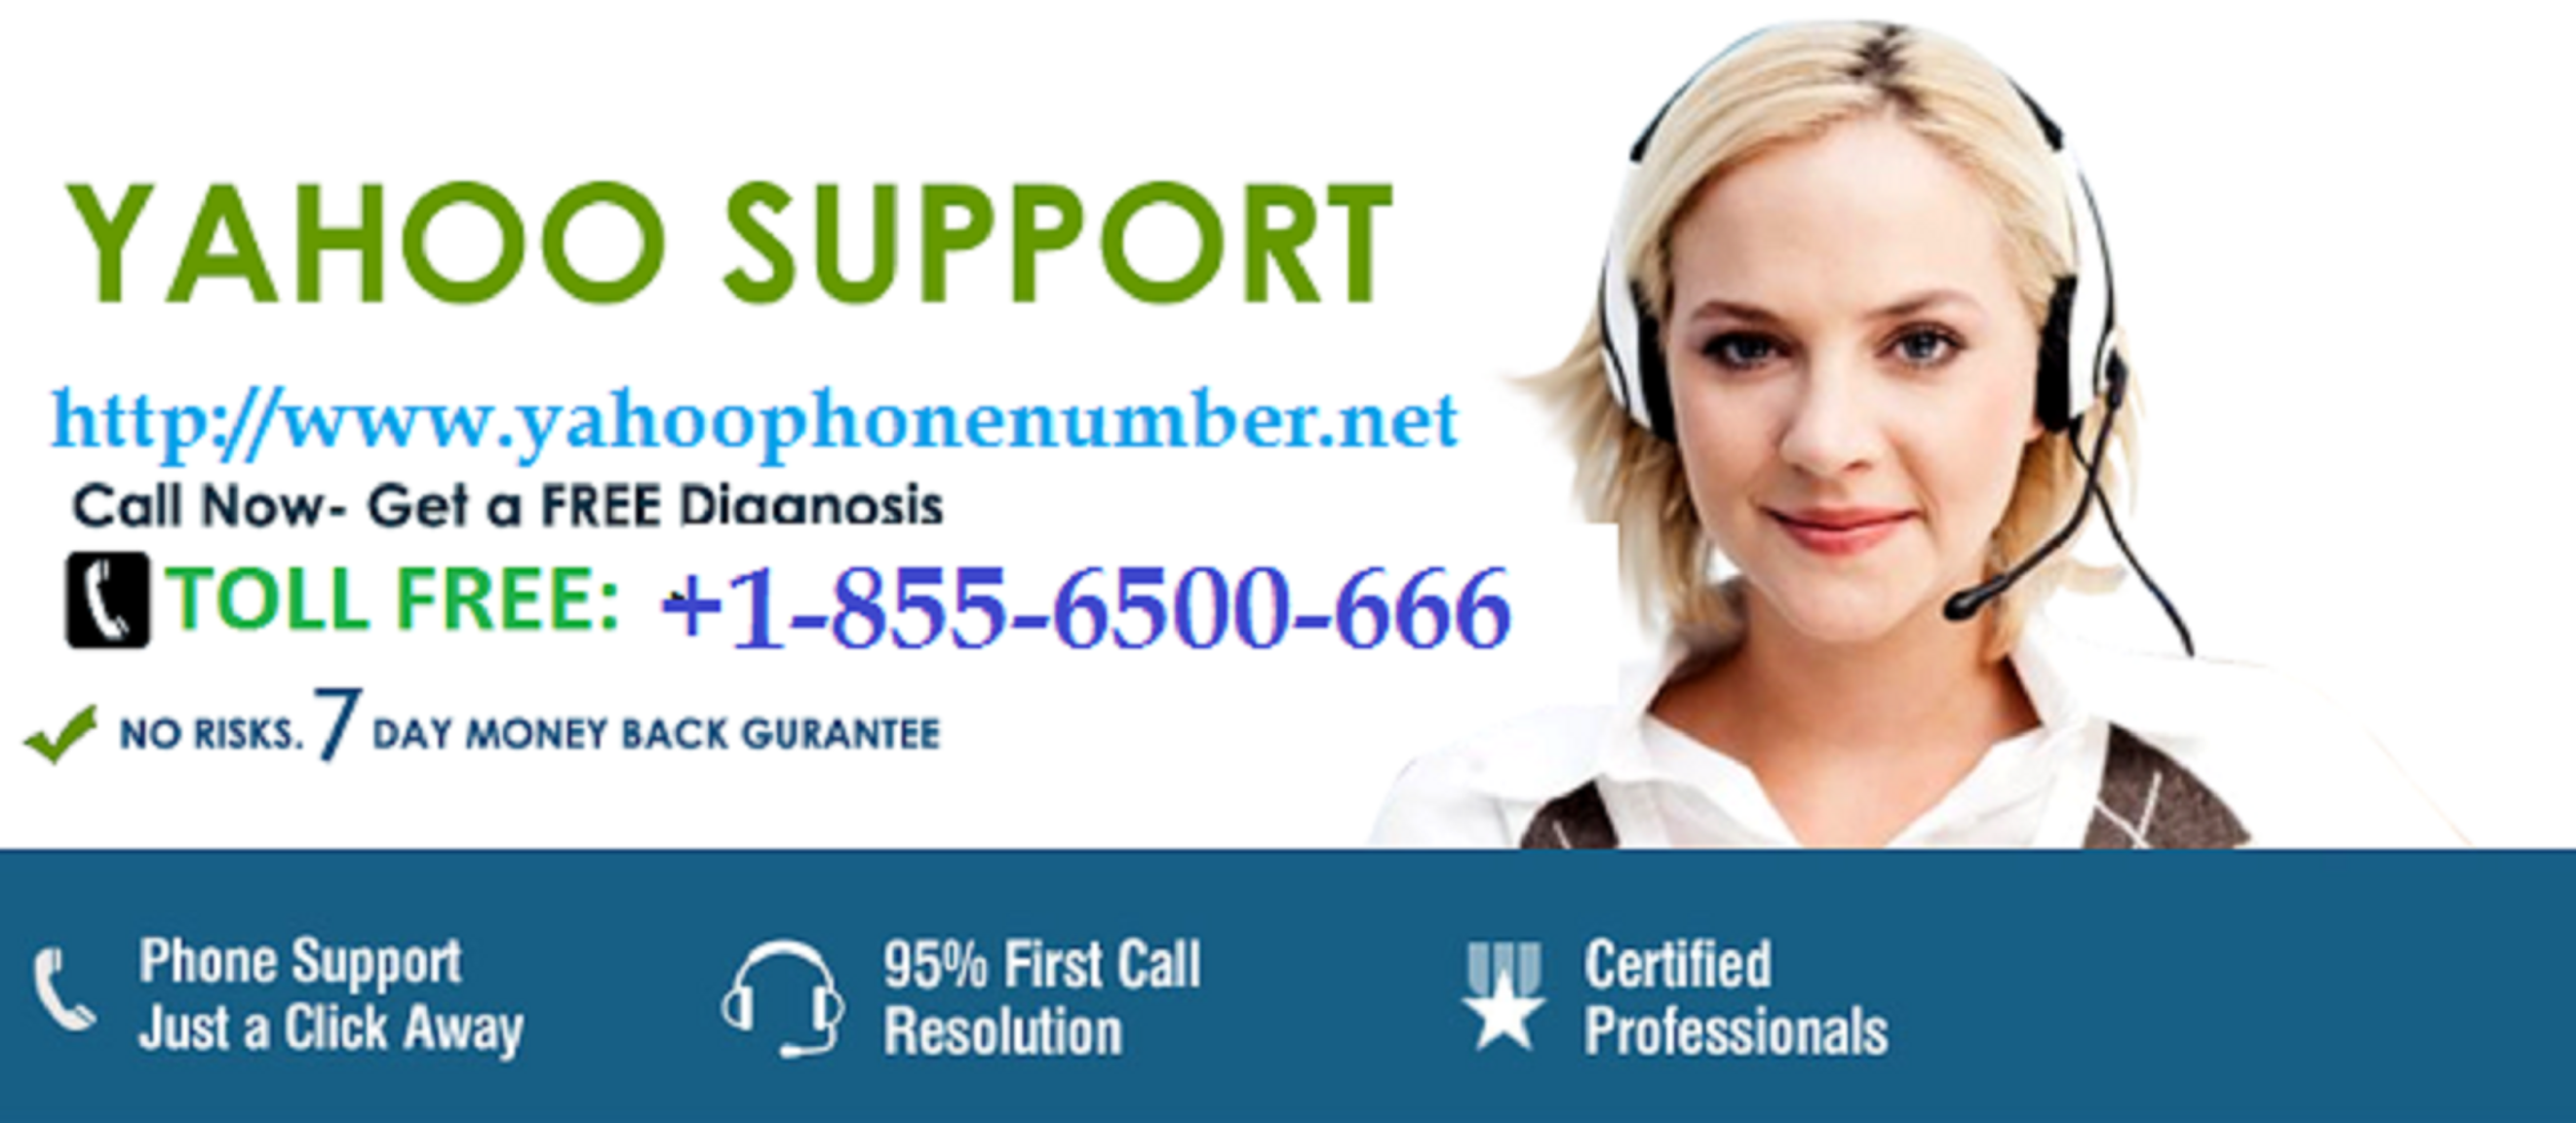 Yahoo customer care helpline service 